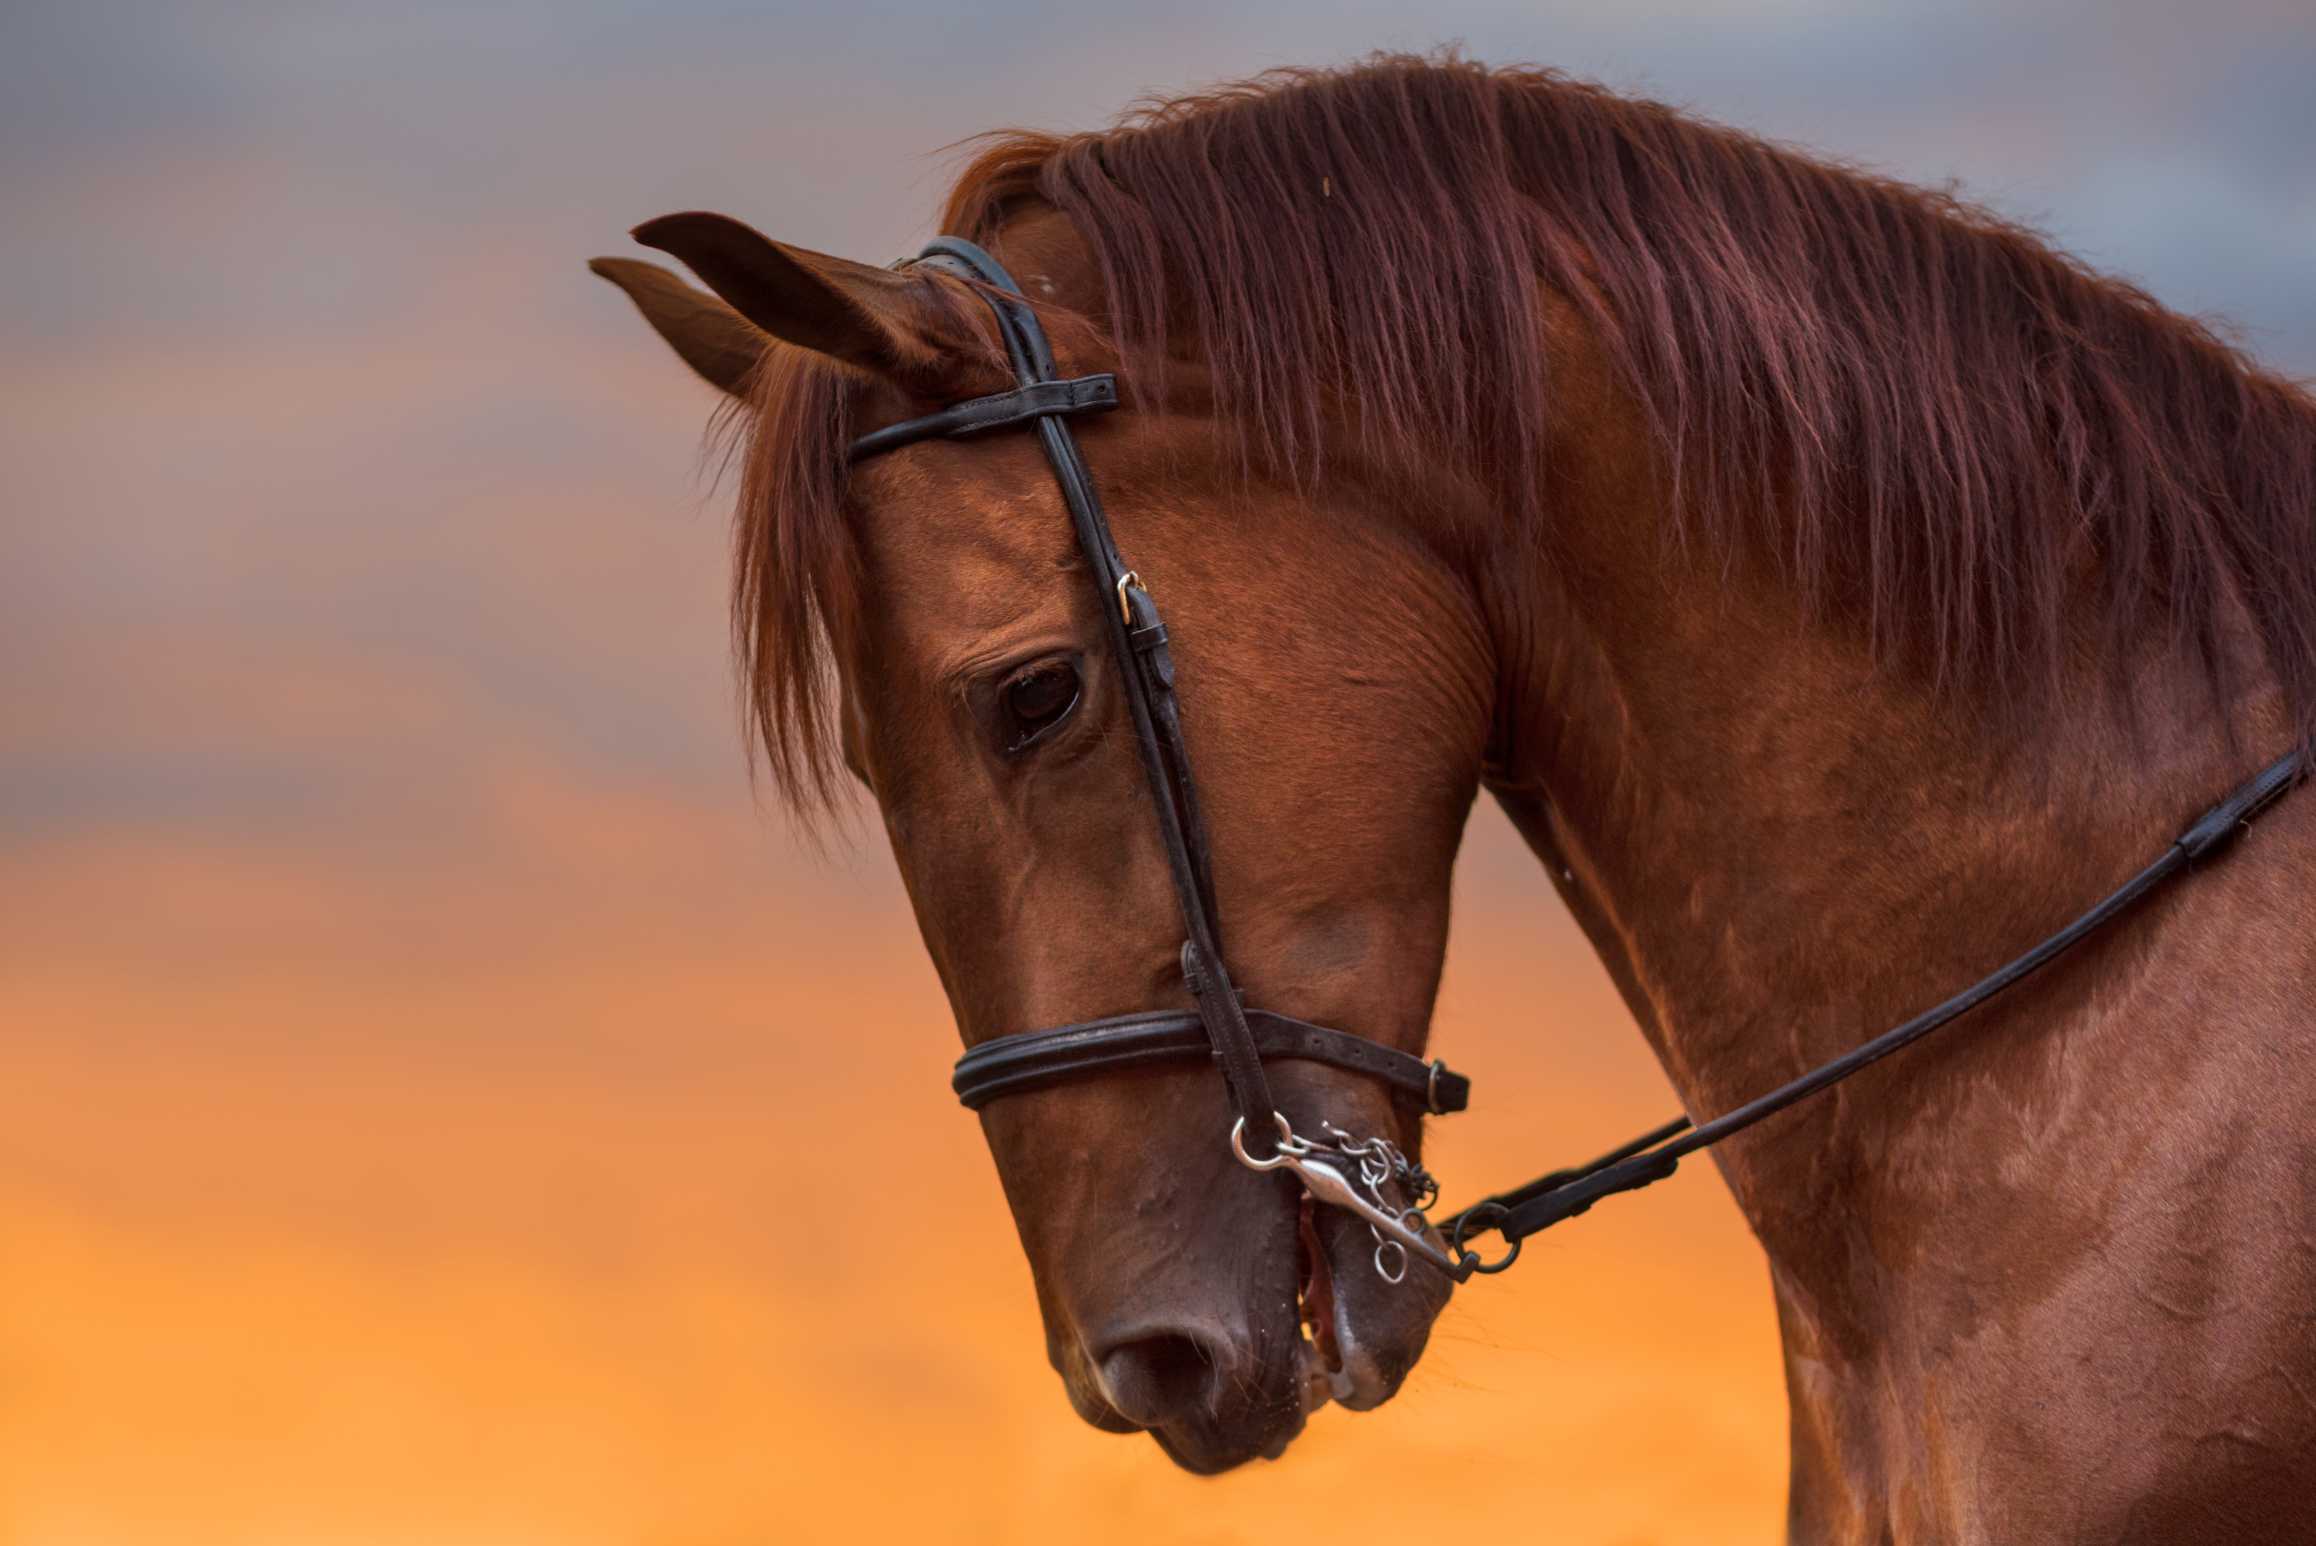 Horse Portrait Photography Print - ArtSmiley